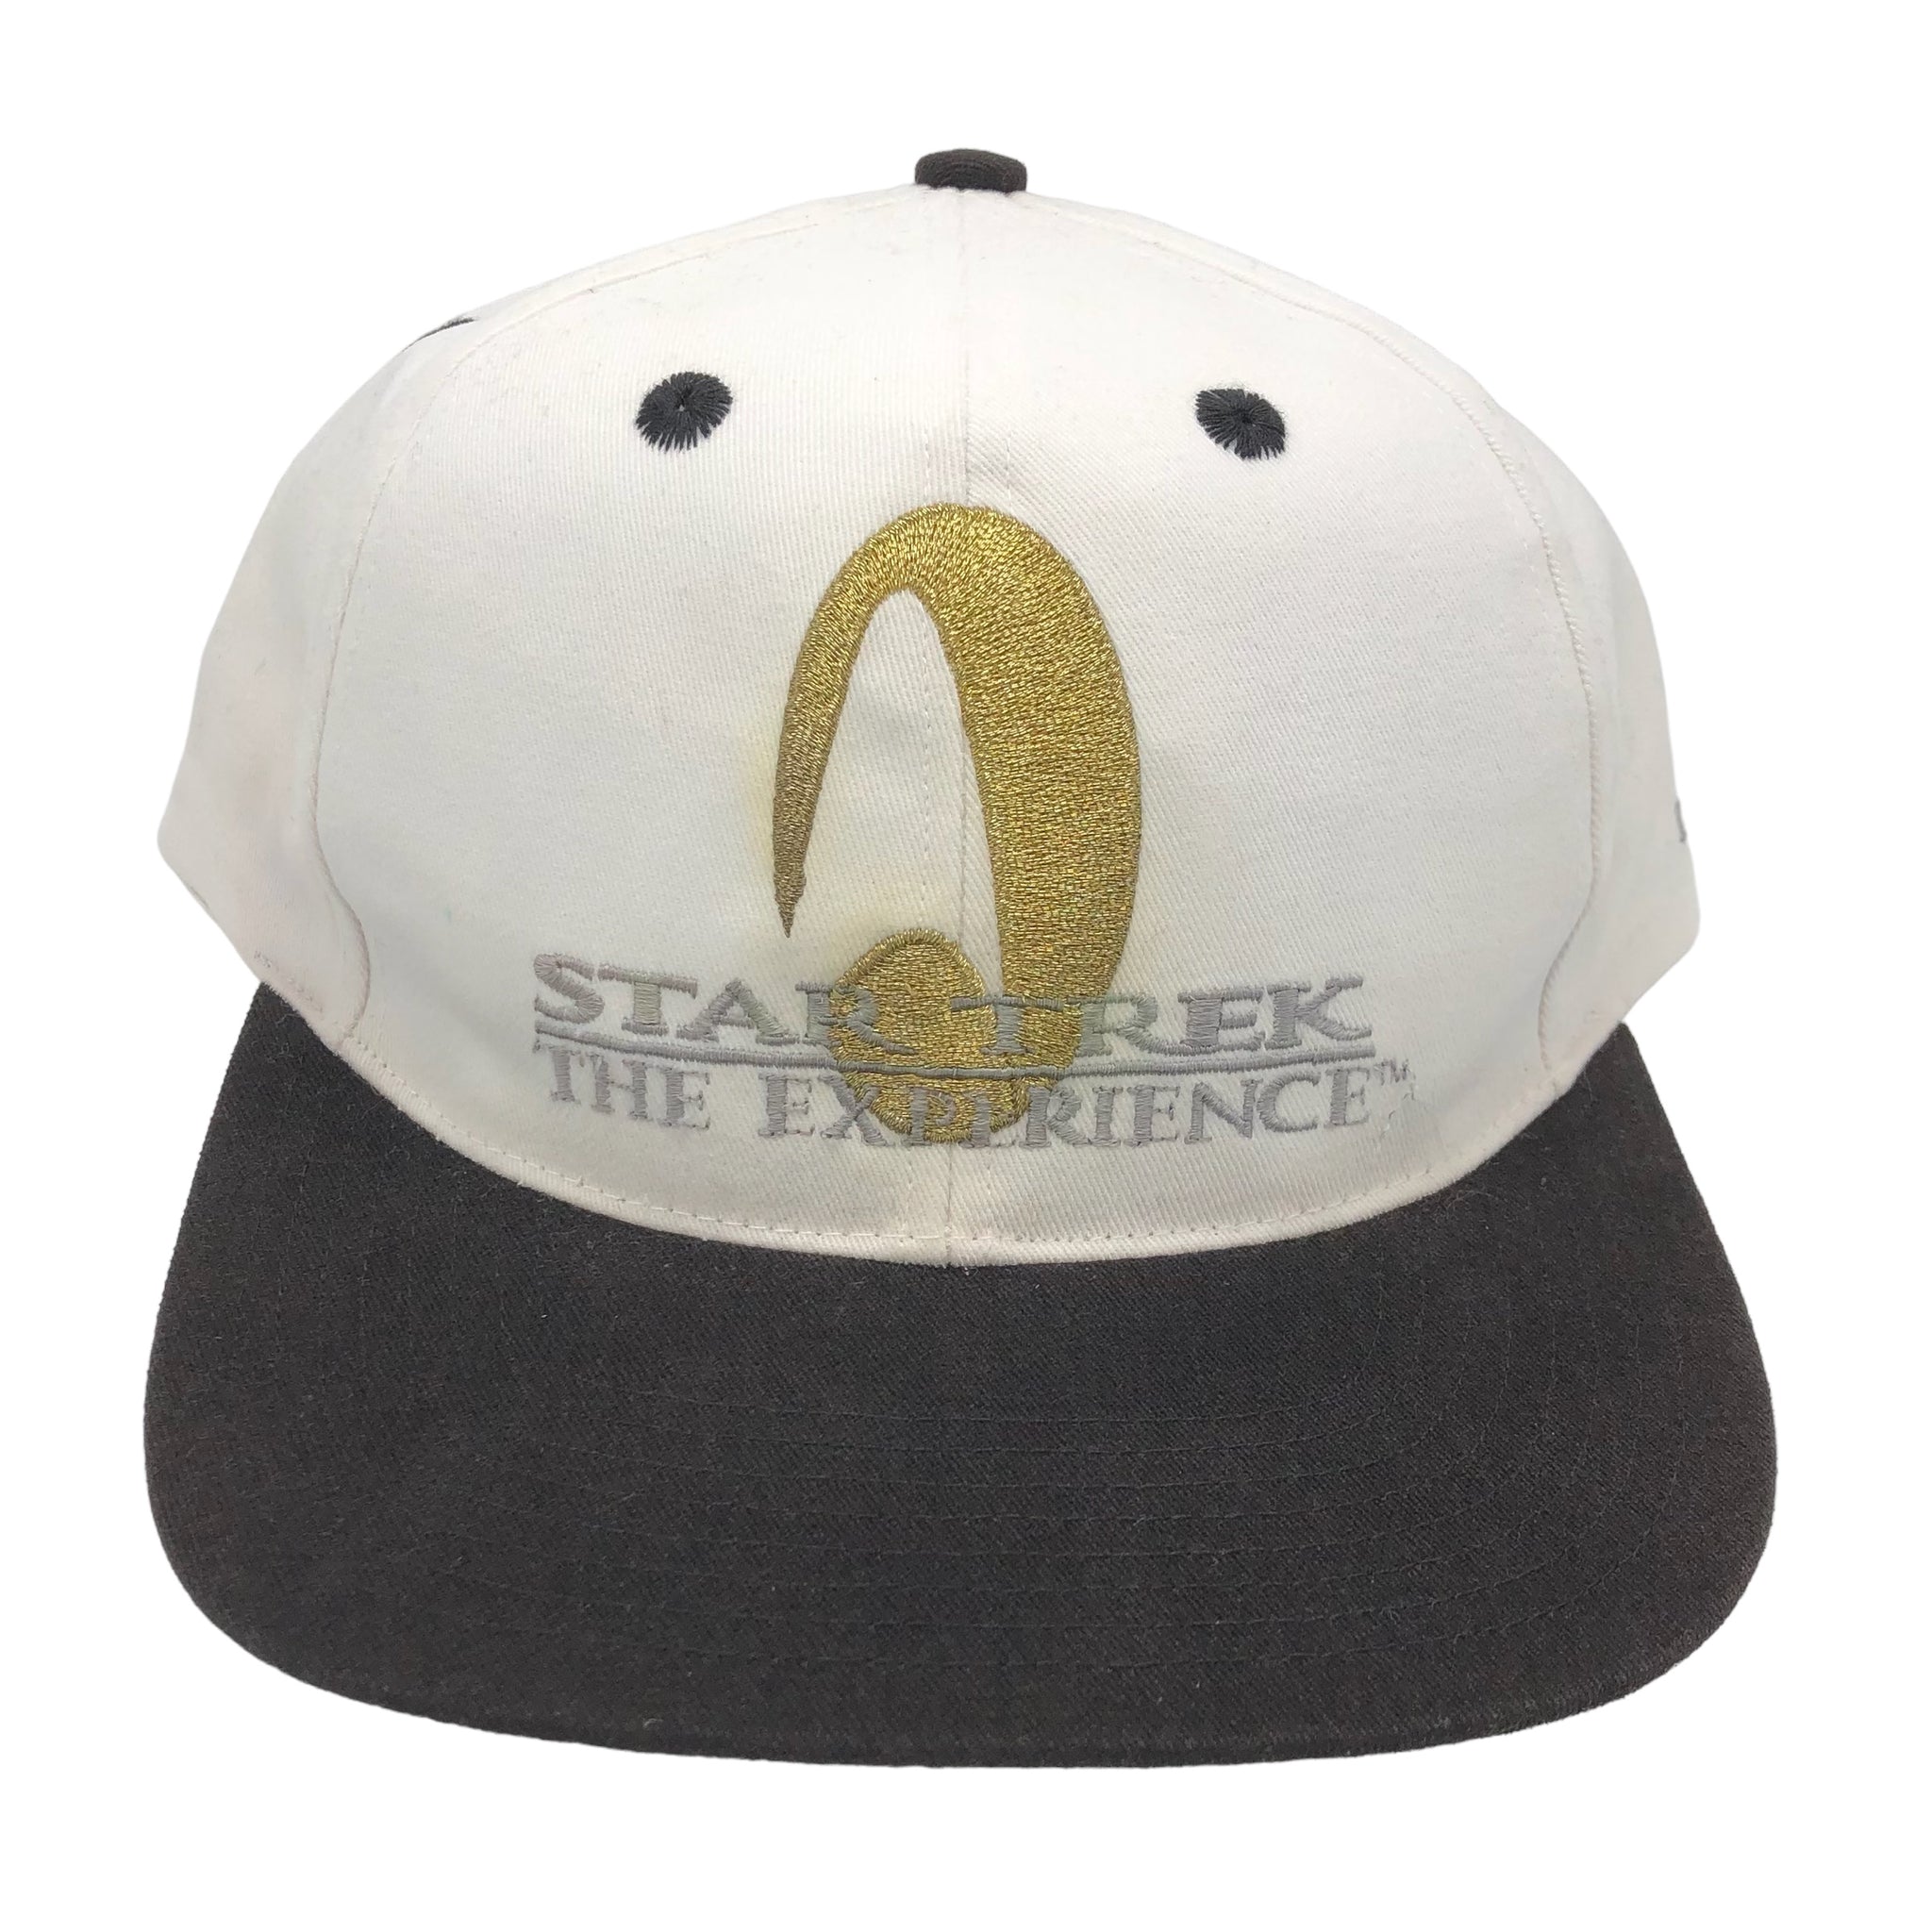 Vintage Star Trek The Experience Snapback Hat Las Vegas Hilton